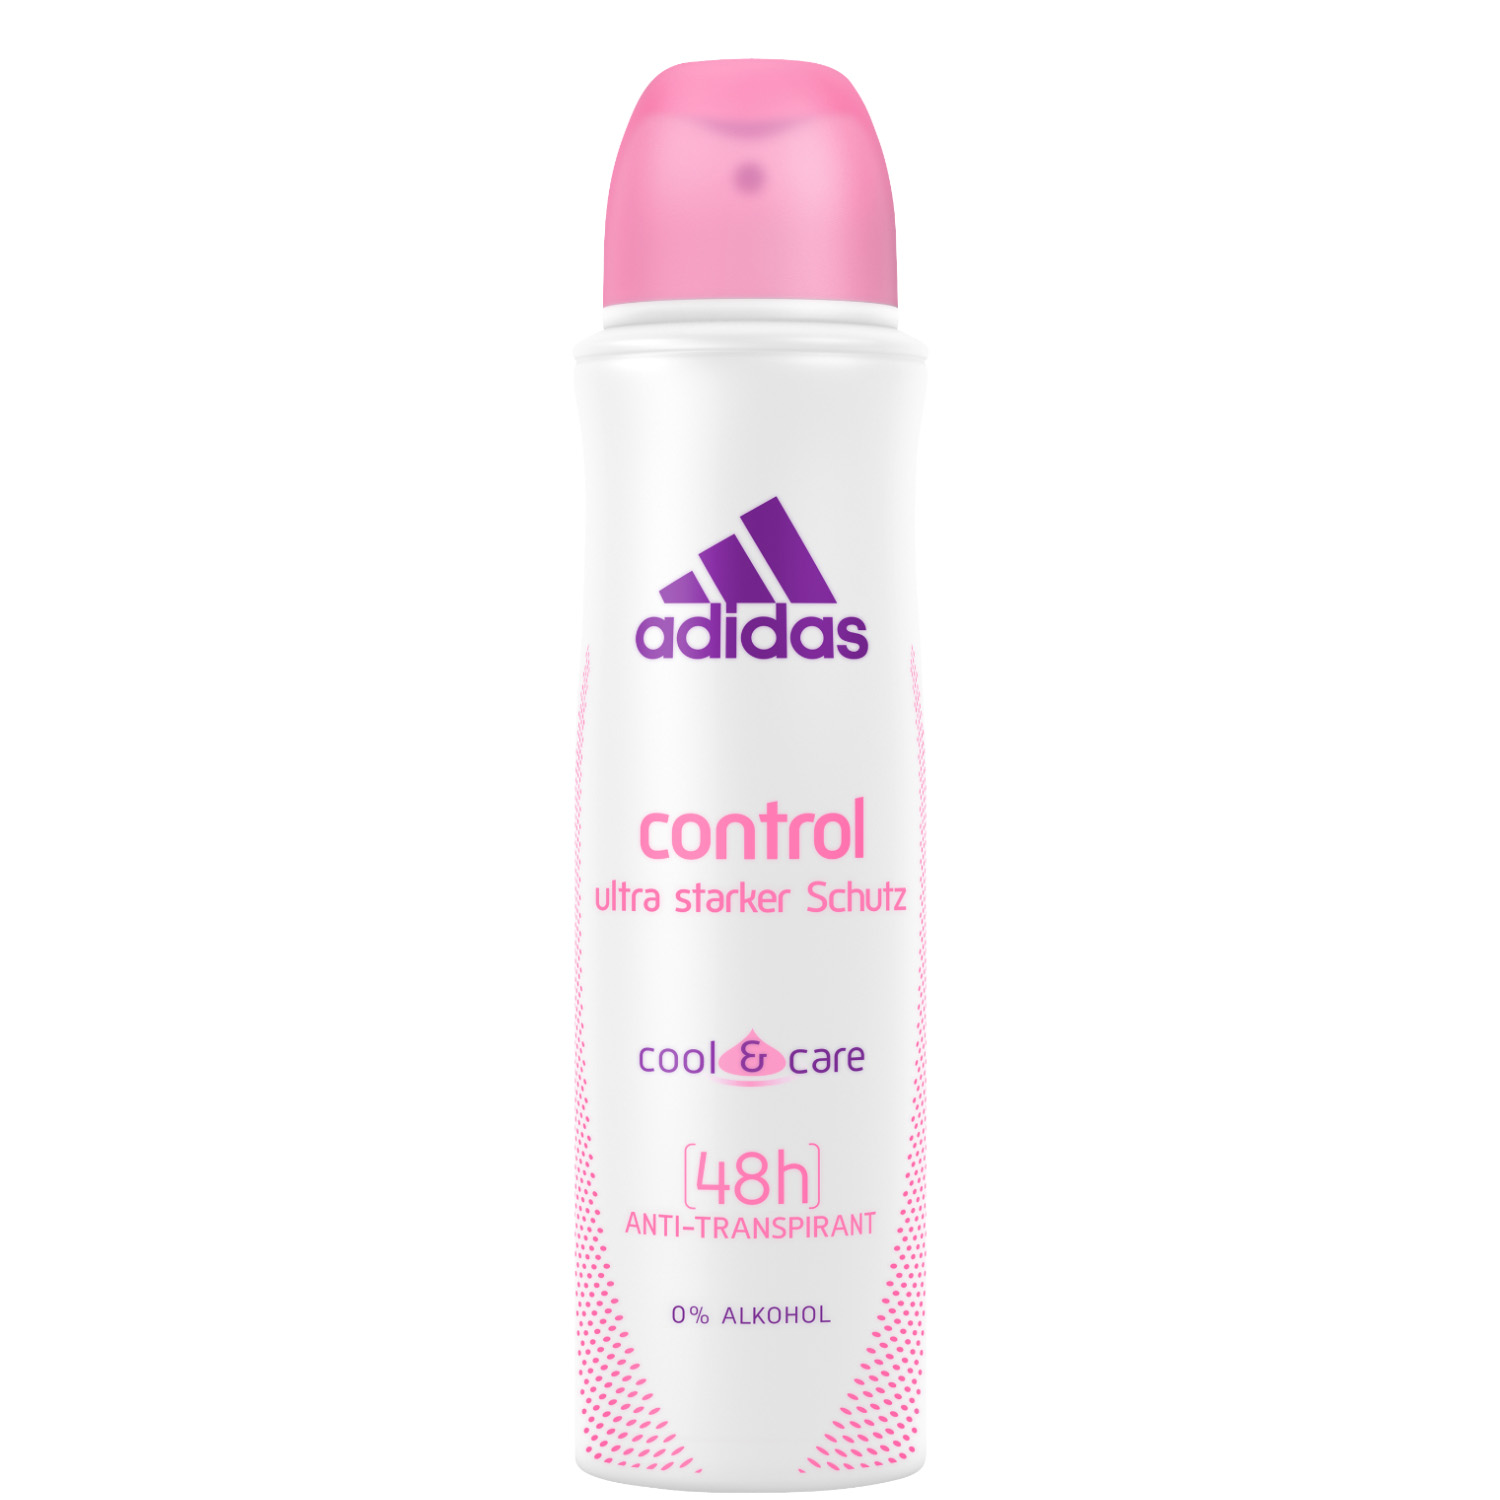 Adidas for Women Cool & Care Control 48H Deodorant Spray 150ml